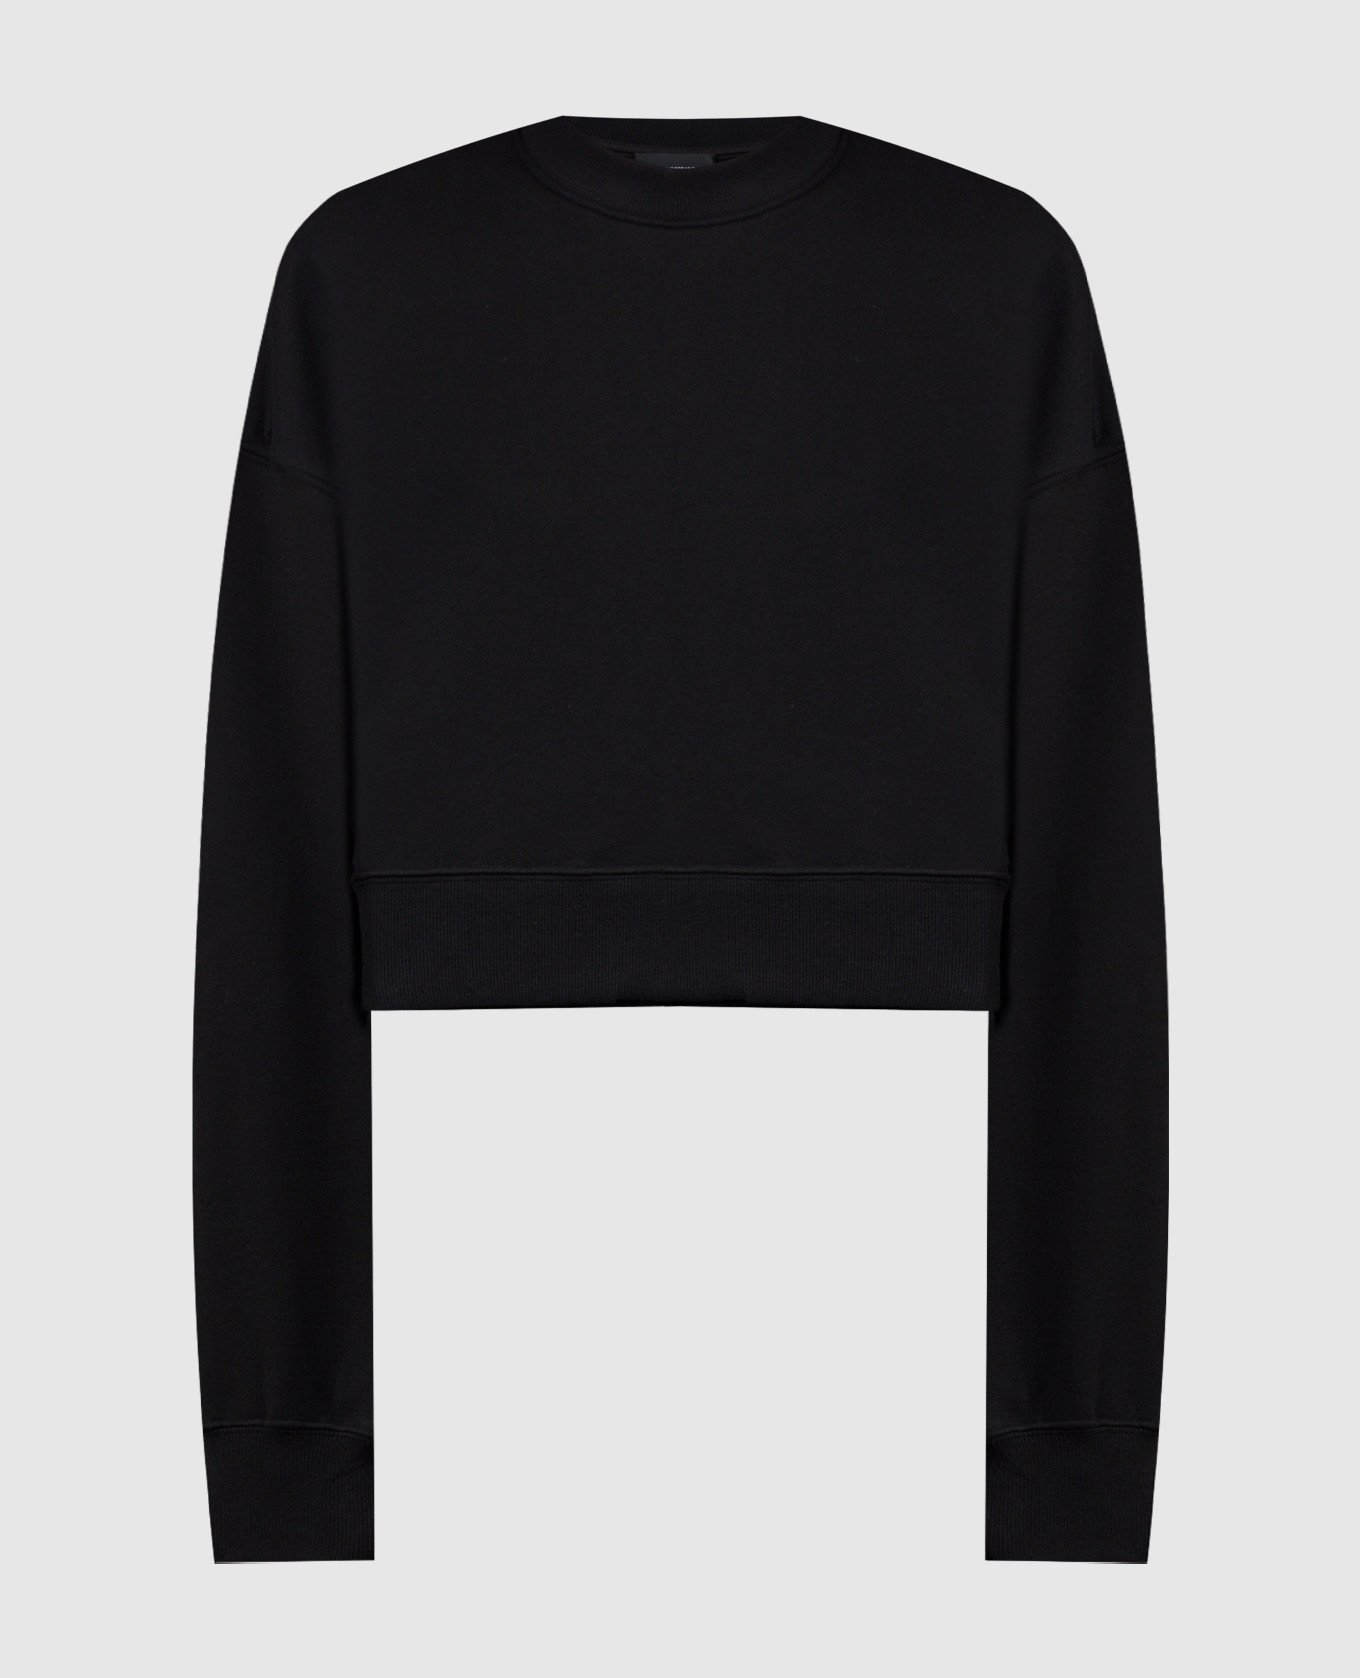 Black sweatshirt